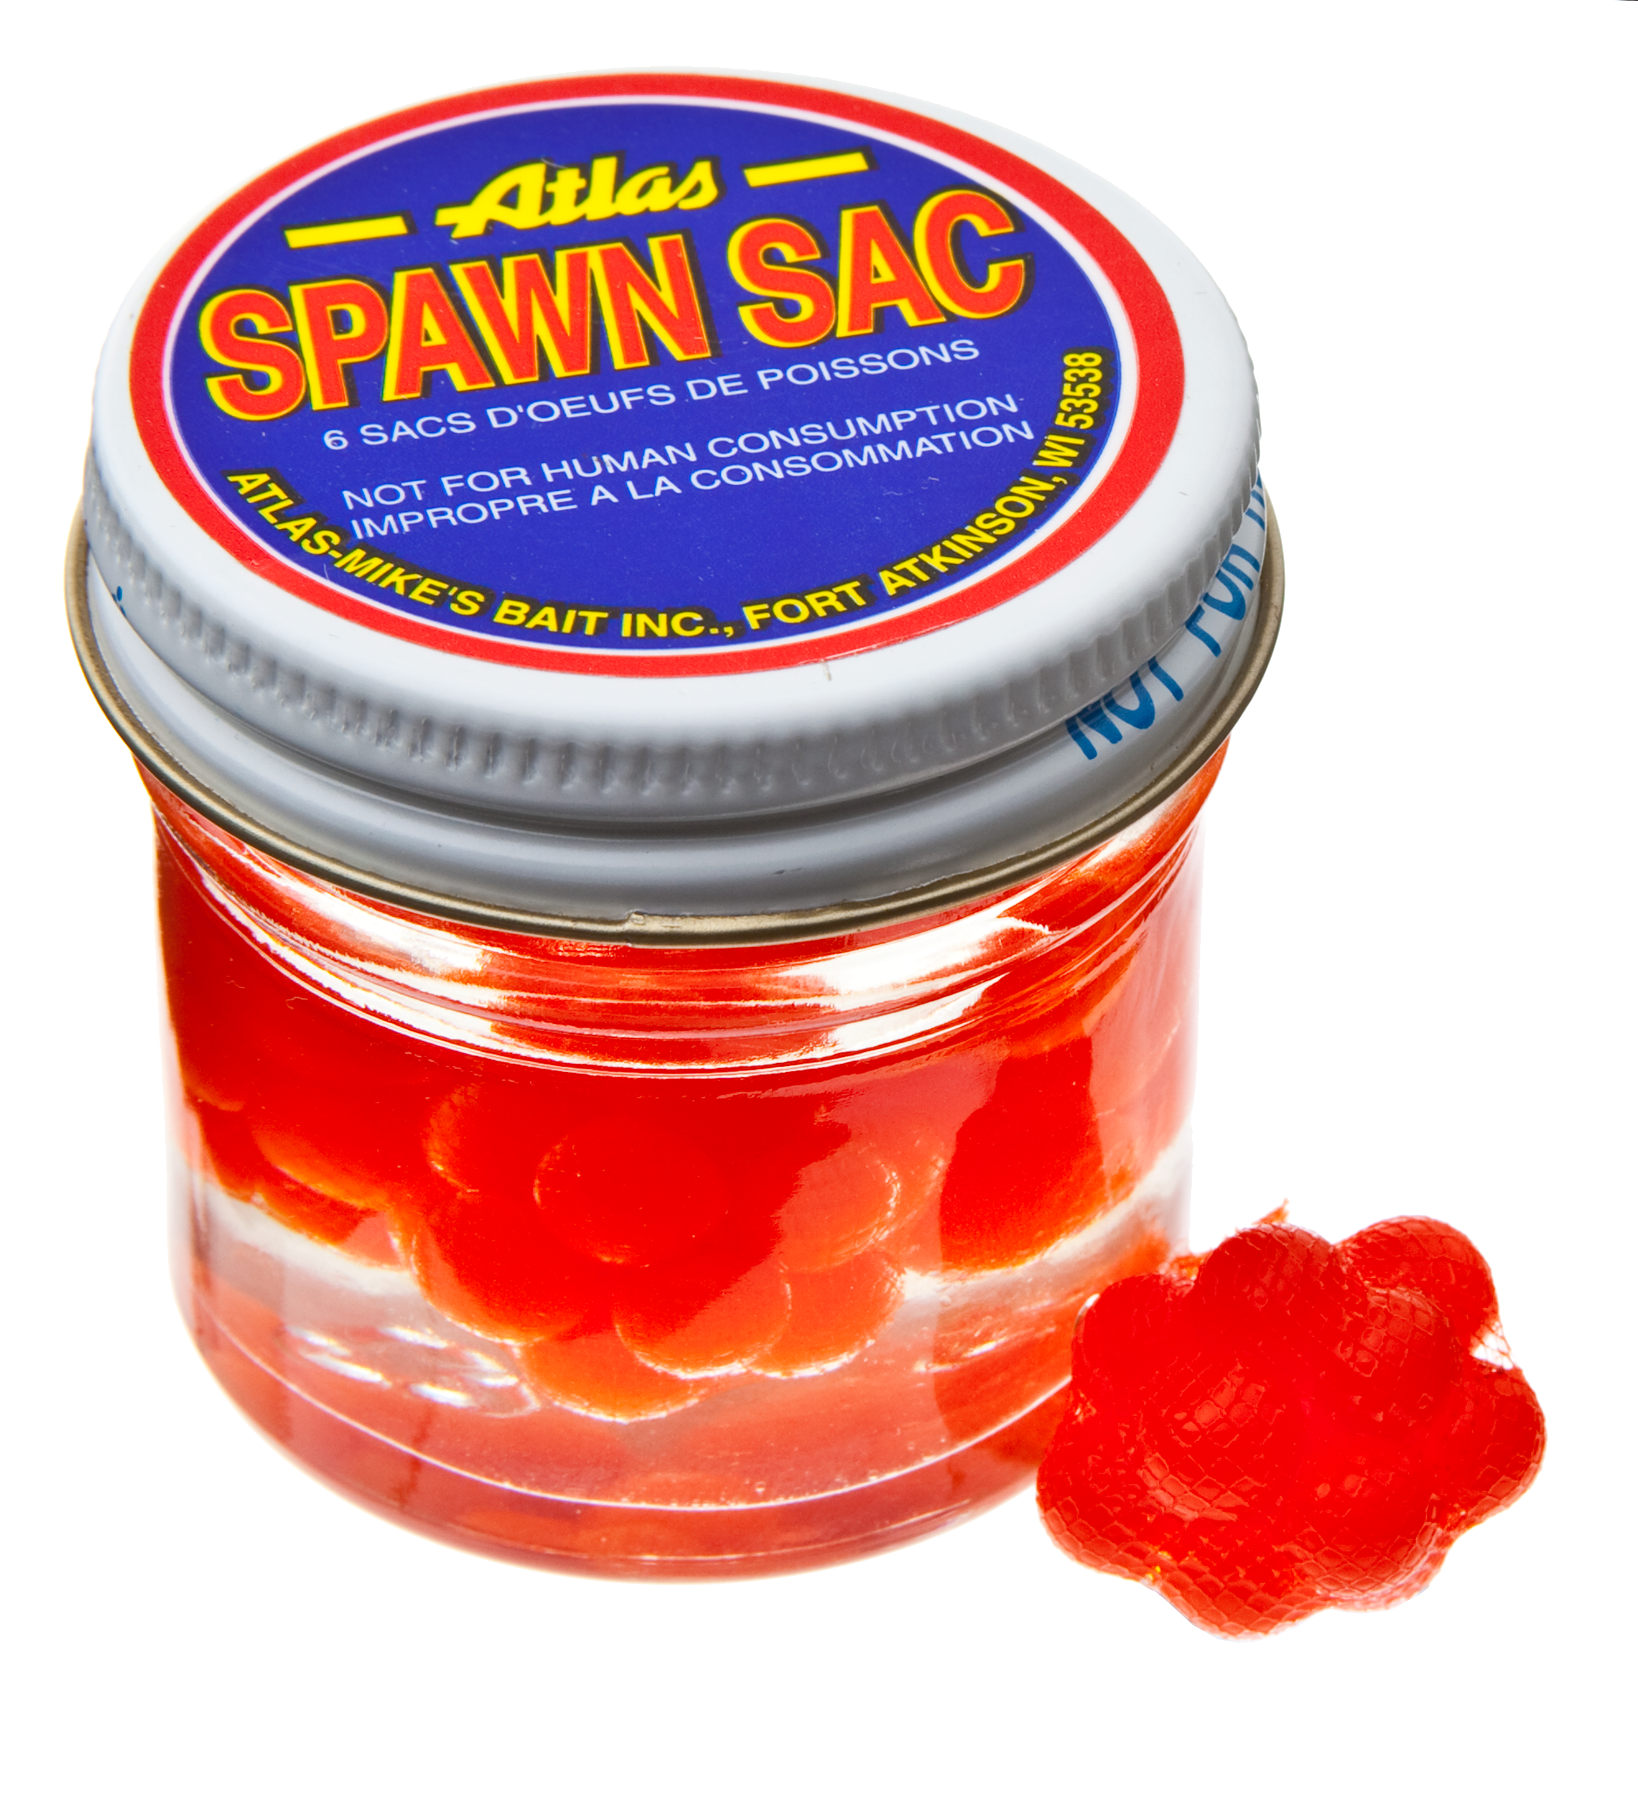  Atlas Mike's Spawn Sac Salmon Eggs 1 Jar of 6 Sacs